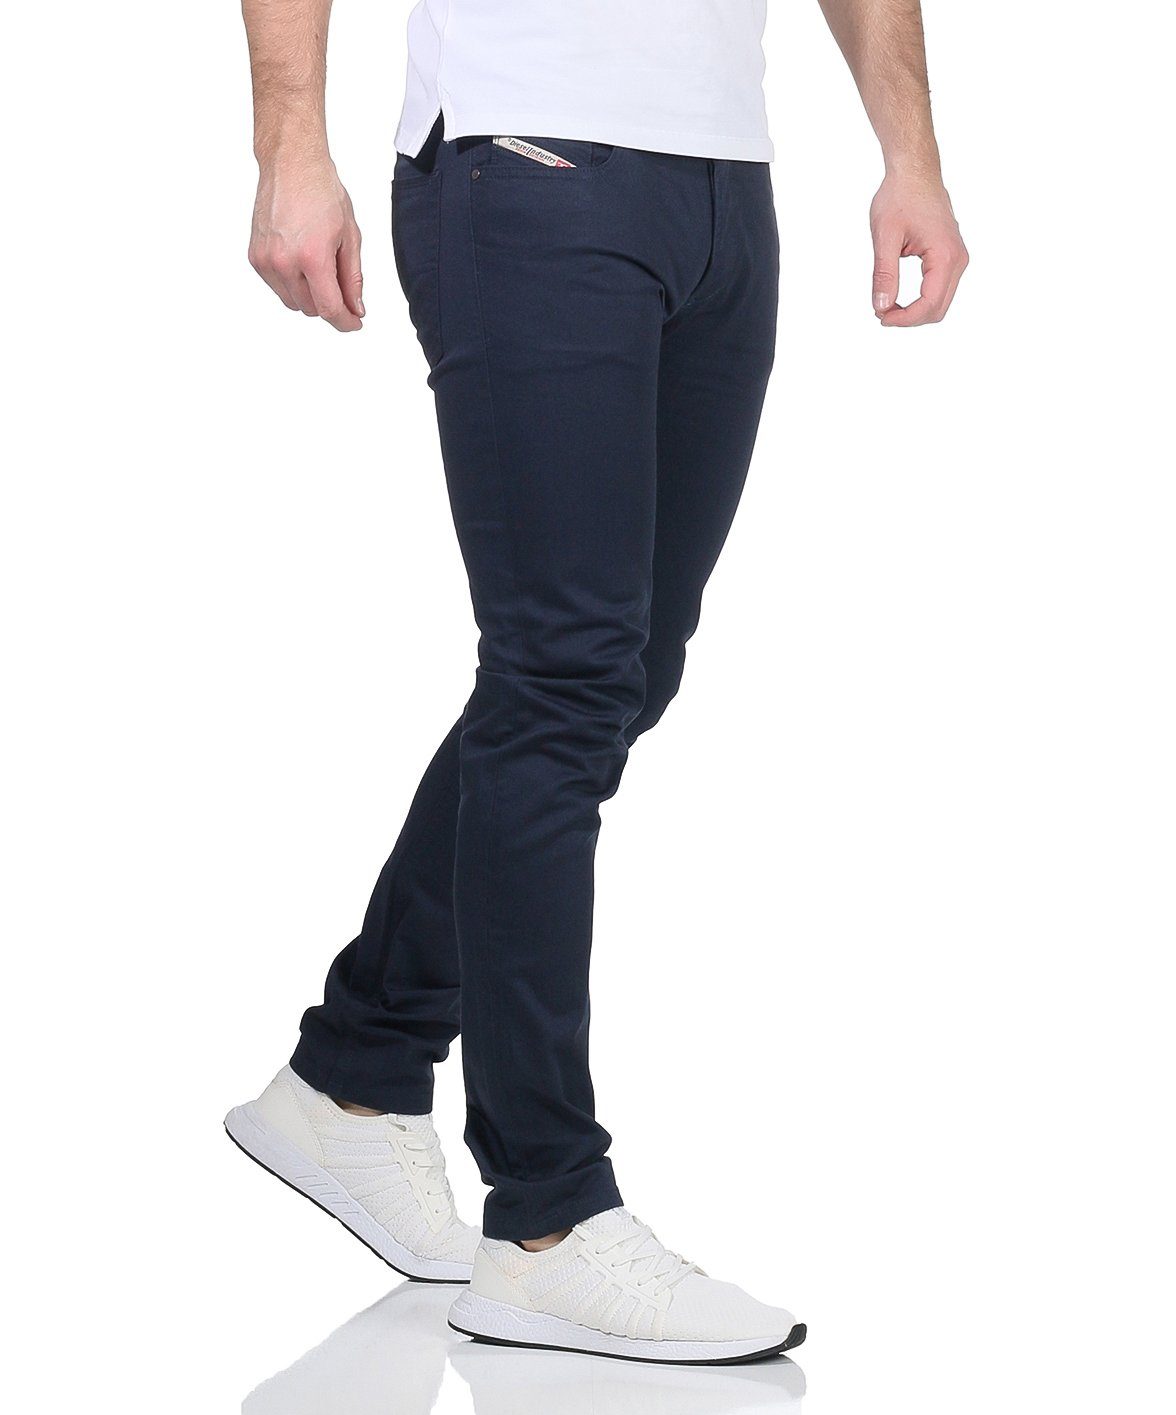 32 Diesel Hose, Diesel Skinny-fit-Jeans Länge: Herren inch Sommer, R-TROXER-A 5-Pocket-Style, Einheitsgröße Navy Skinny-fit-Jeans